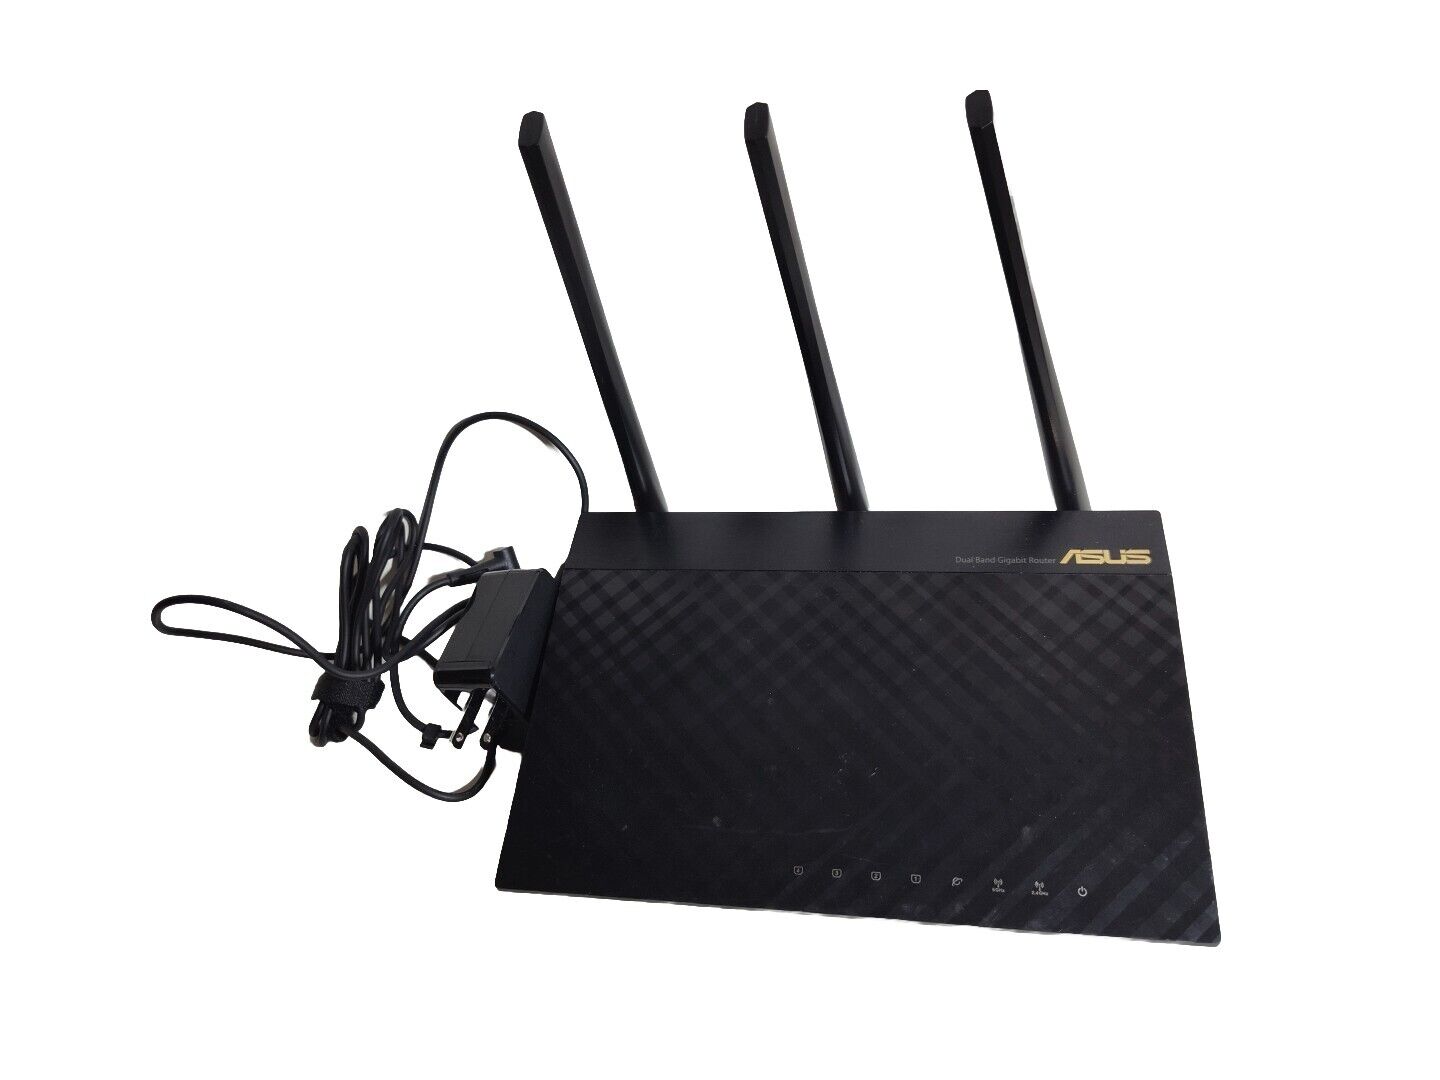 ASUS WiFi Router (RT-AC66U B1) Dual Band Gigabit Wireless Internet Router